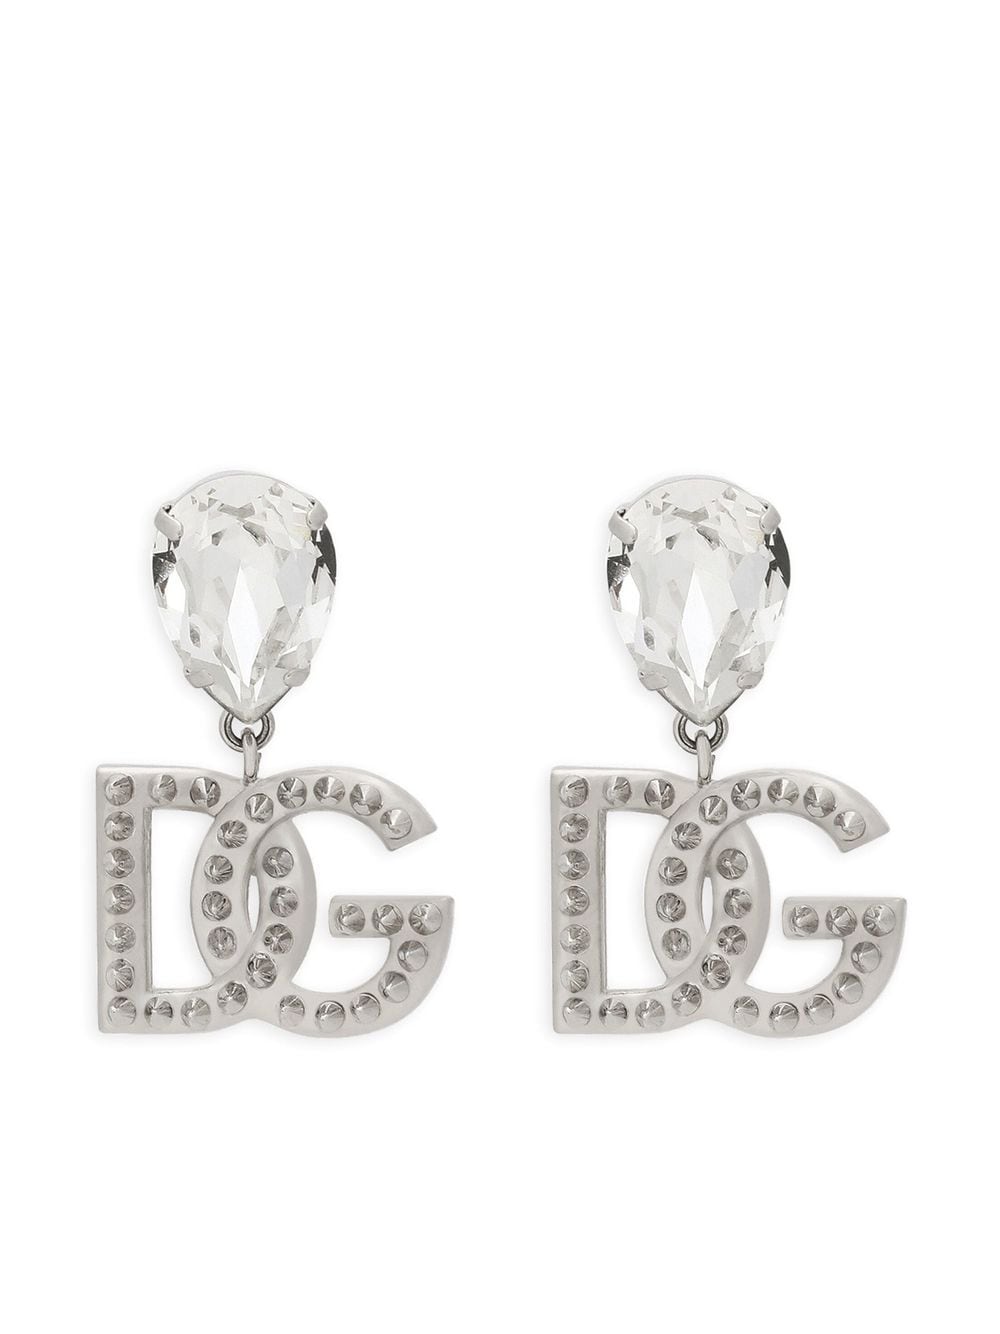 d&g earrings